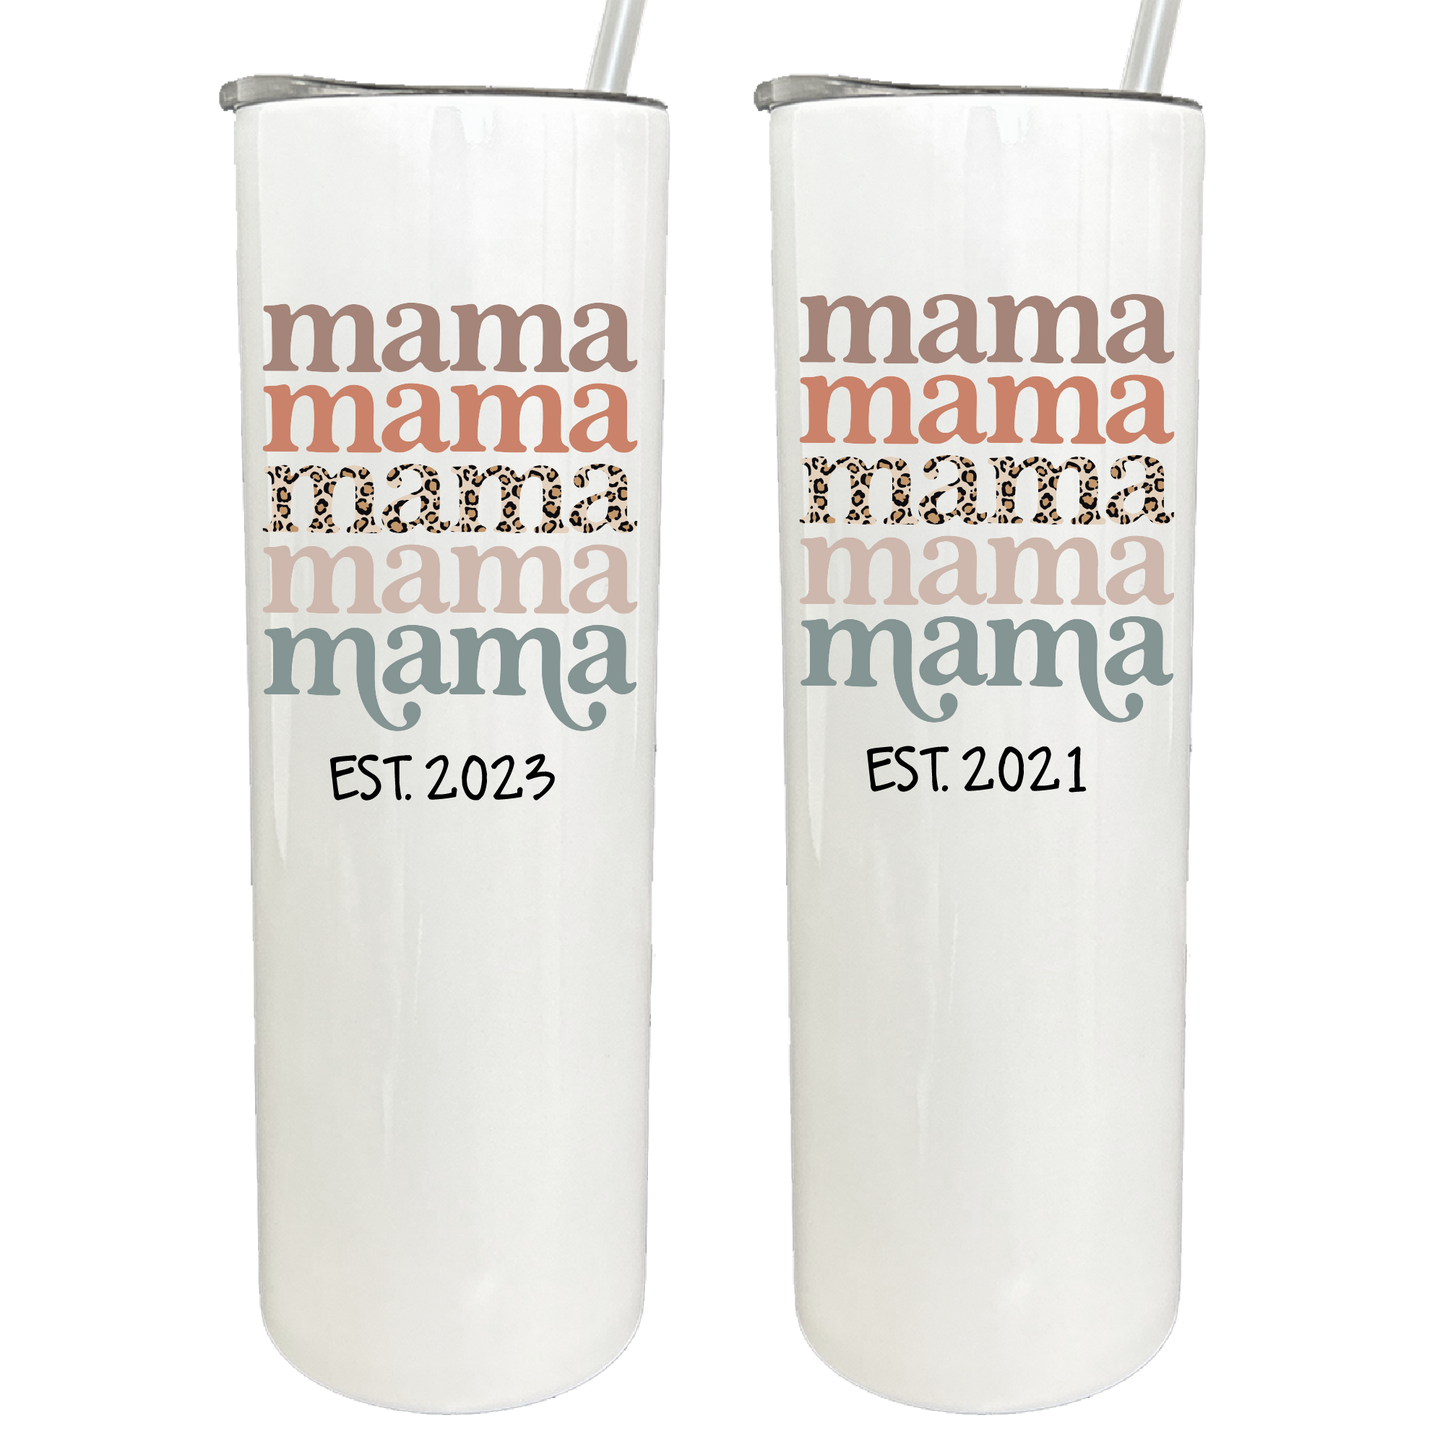 30 oz Personalized Mama Tumbler